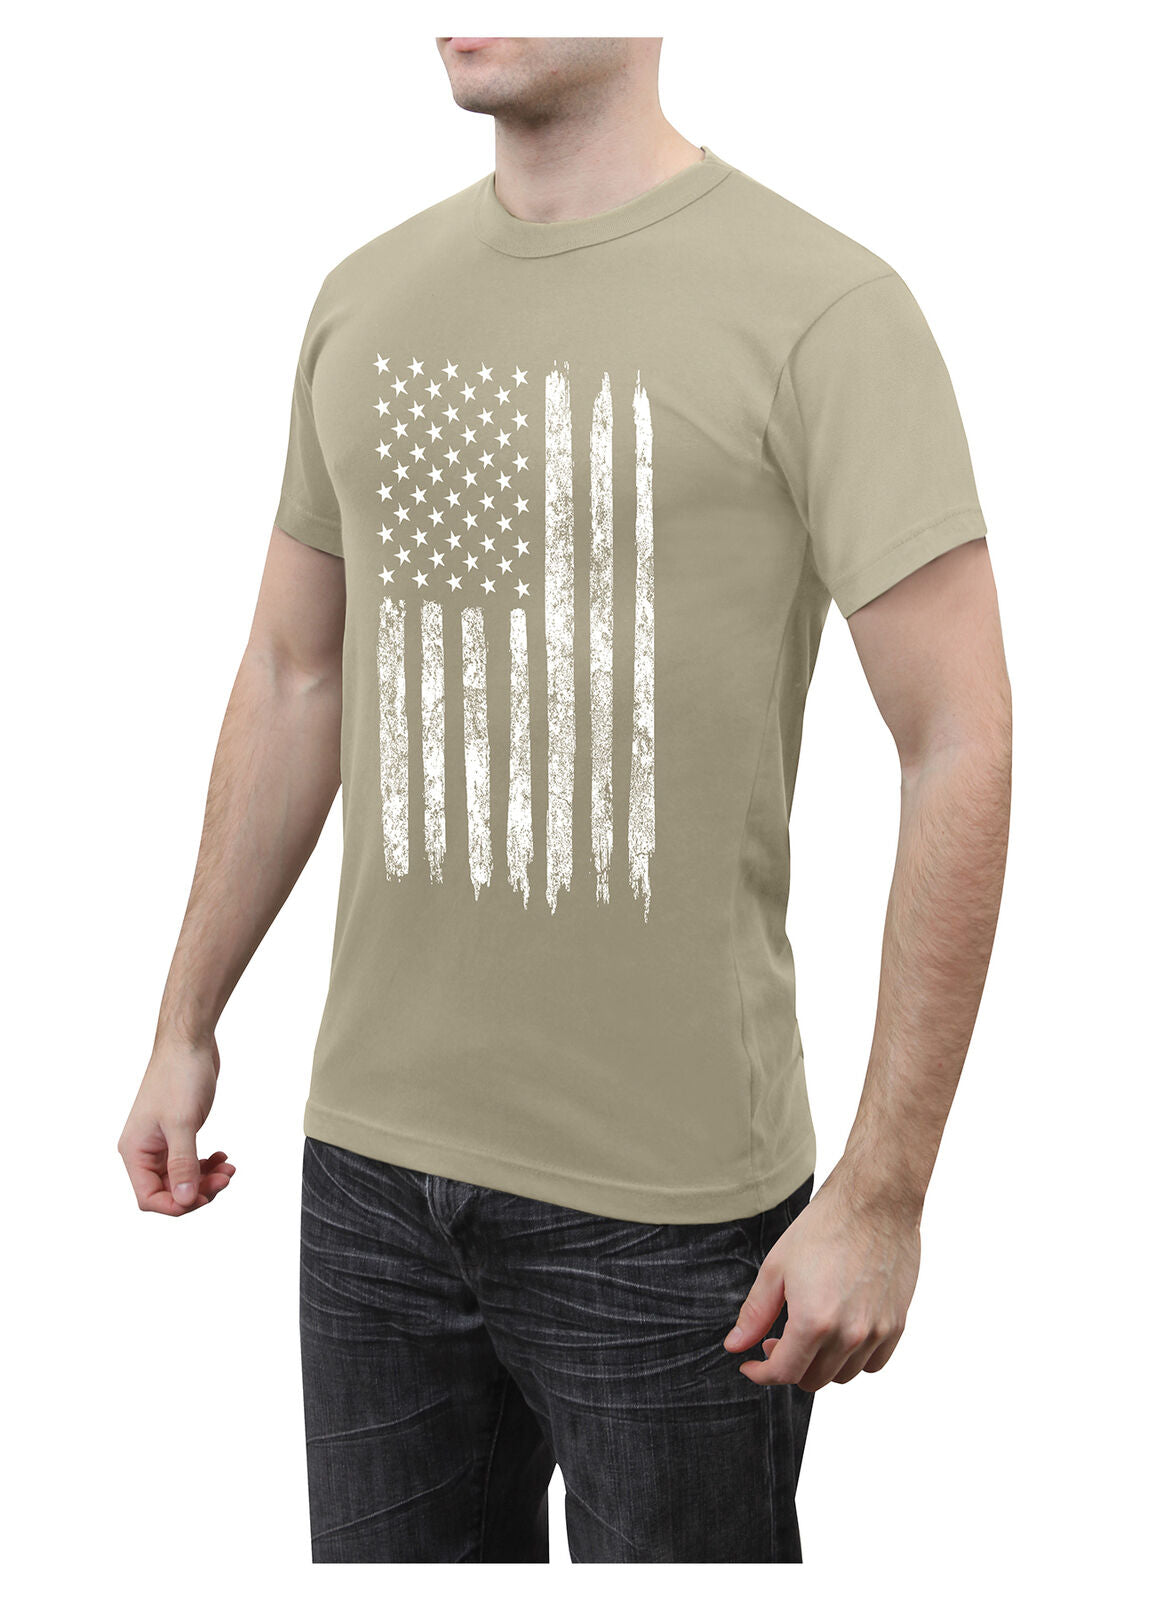 Men's Athletic Fit Distressed US Flag T-Shirt in Desert Sand